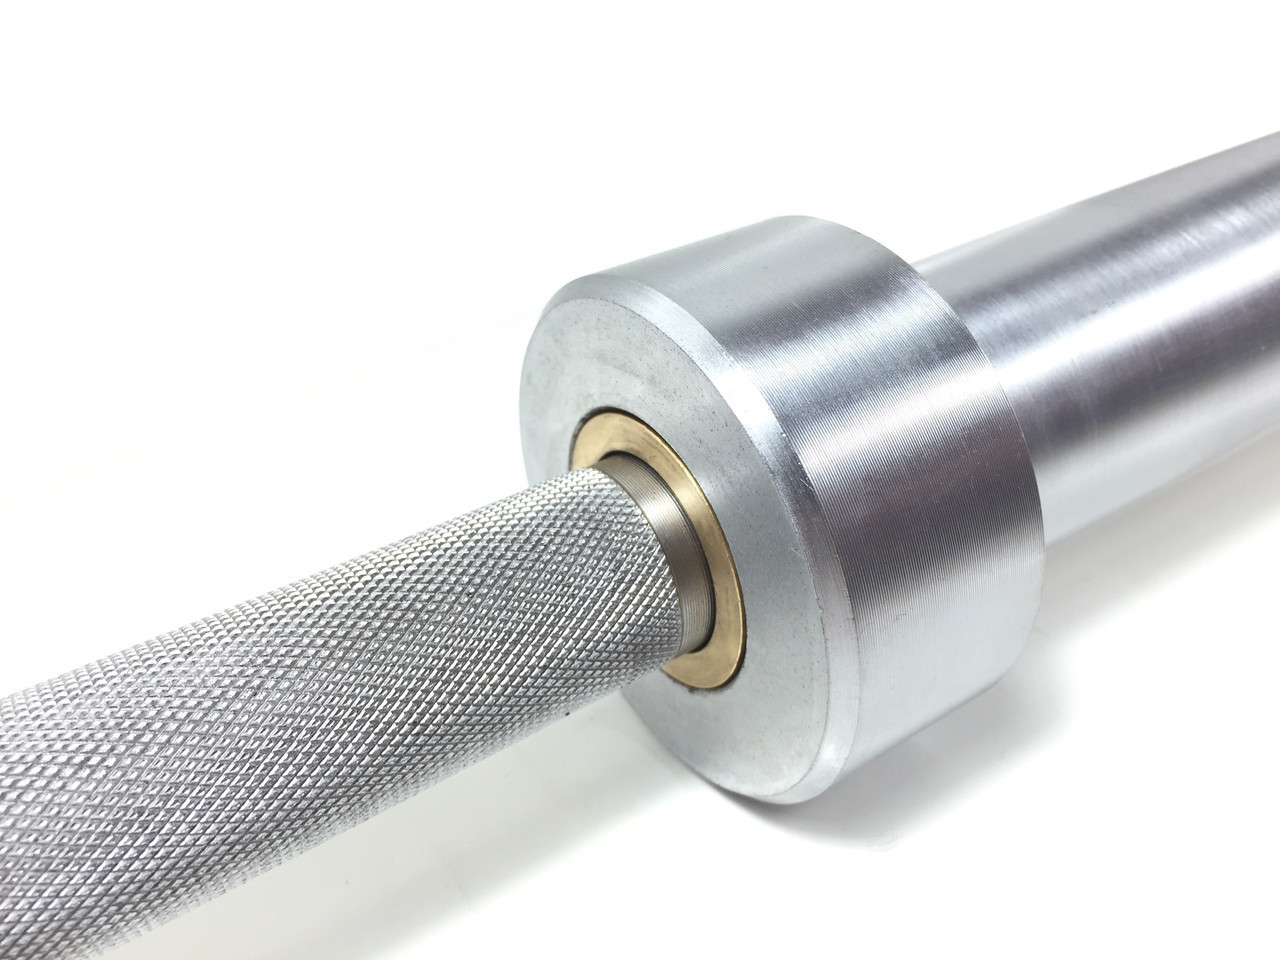 Hellion Platinum Men's Needle Bearing Olympic Barbell (1,500lbs / 180,000PSI) - Chrome